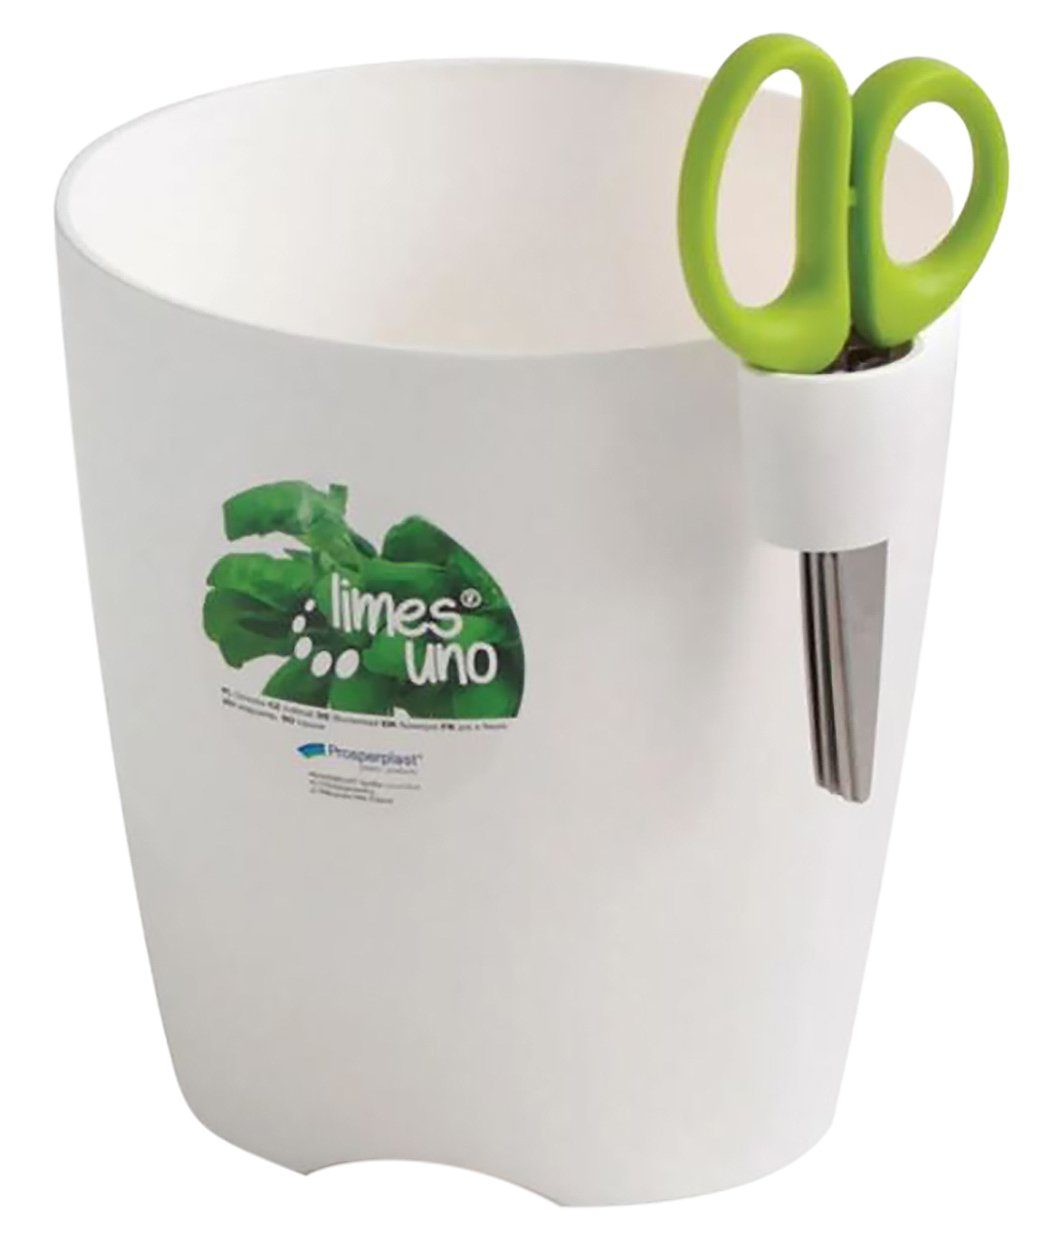 Weiß inkl. Dreifachklinge Prosperplast Kräuterschere Schere Kunststoff Limes tegawo (150mm), UNO Blumentopf mit Kräutertopf